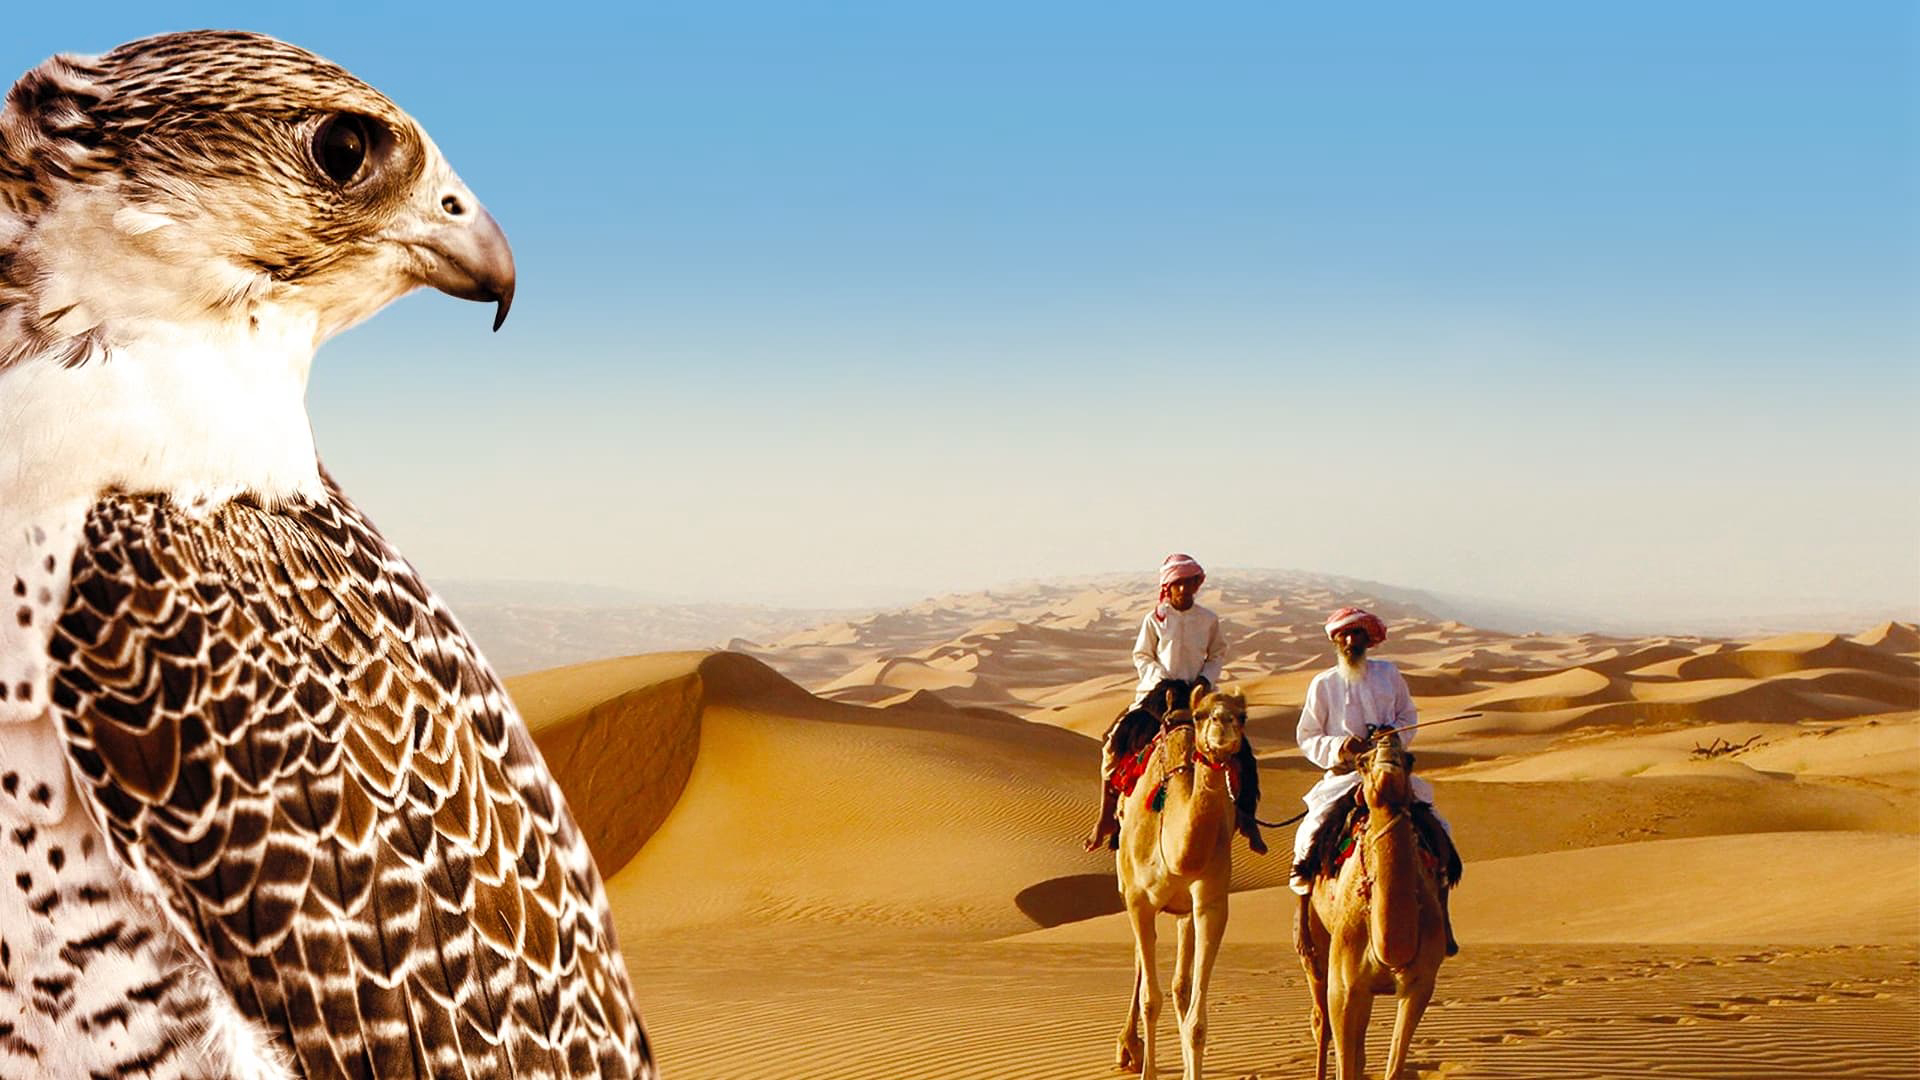 Wild Arabia / Wild Arabia (2013)